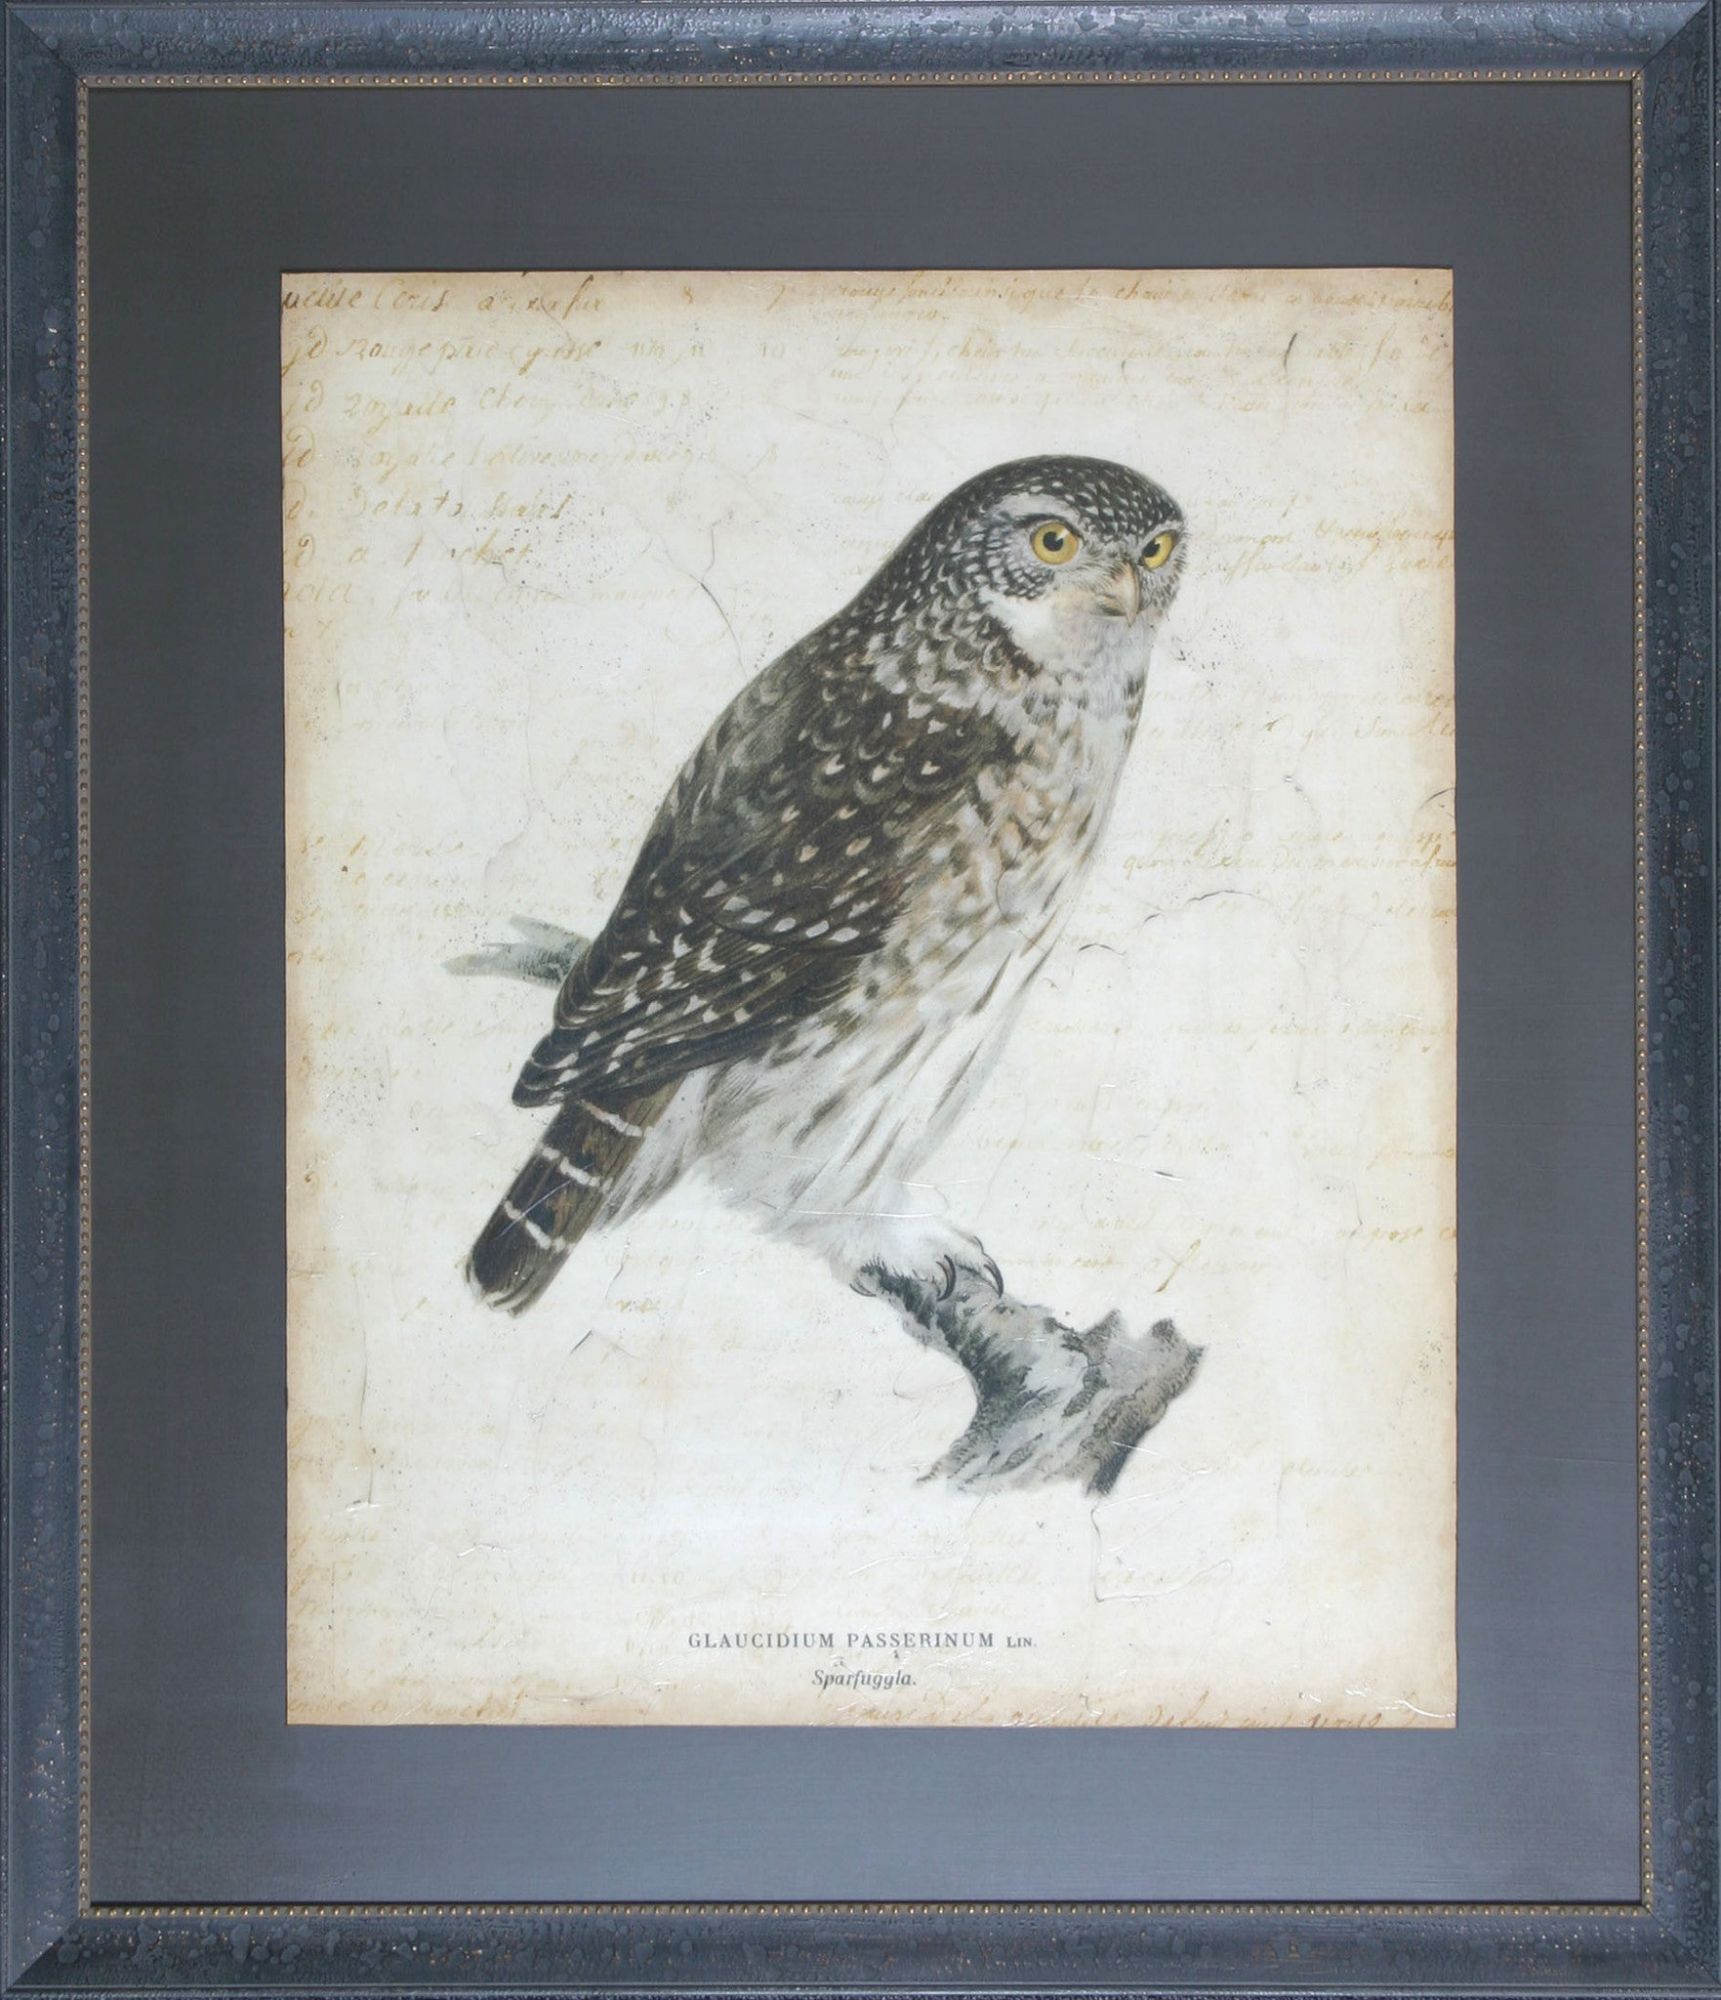 Shadow Catchers Sketch of Owl